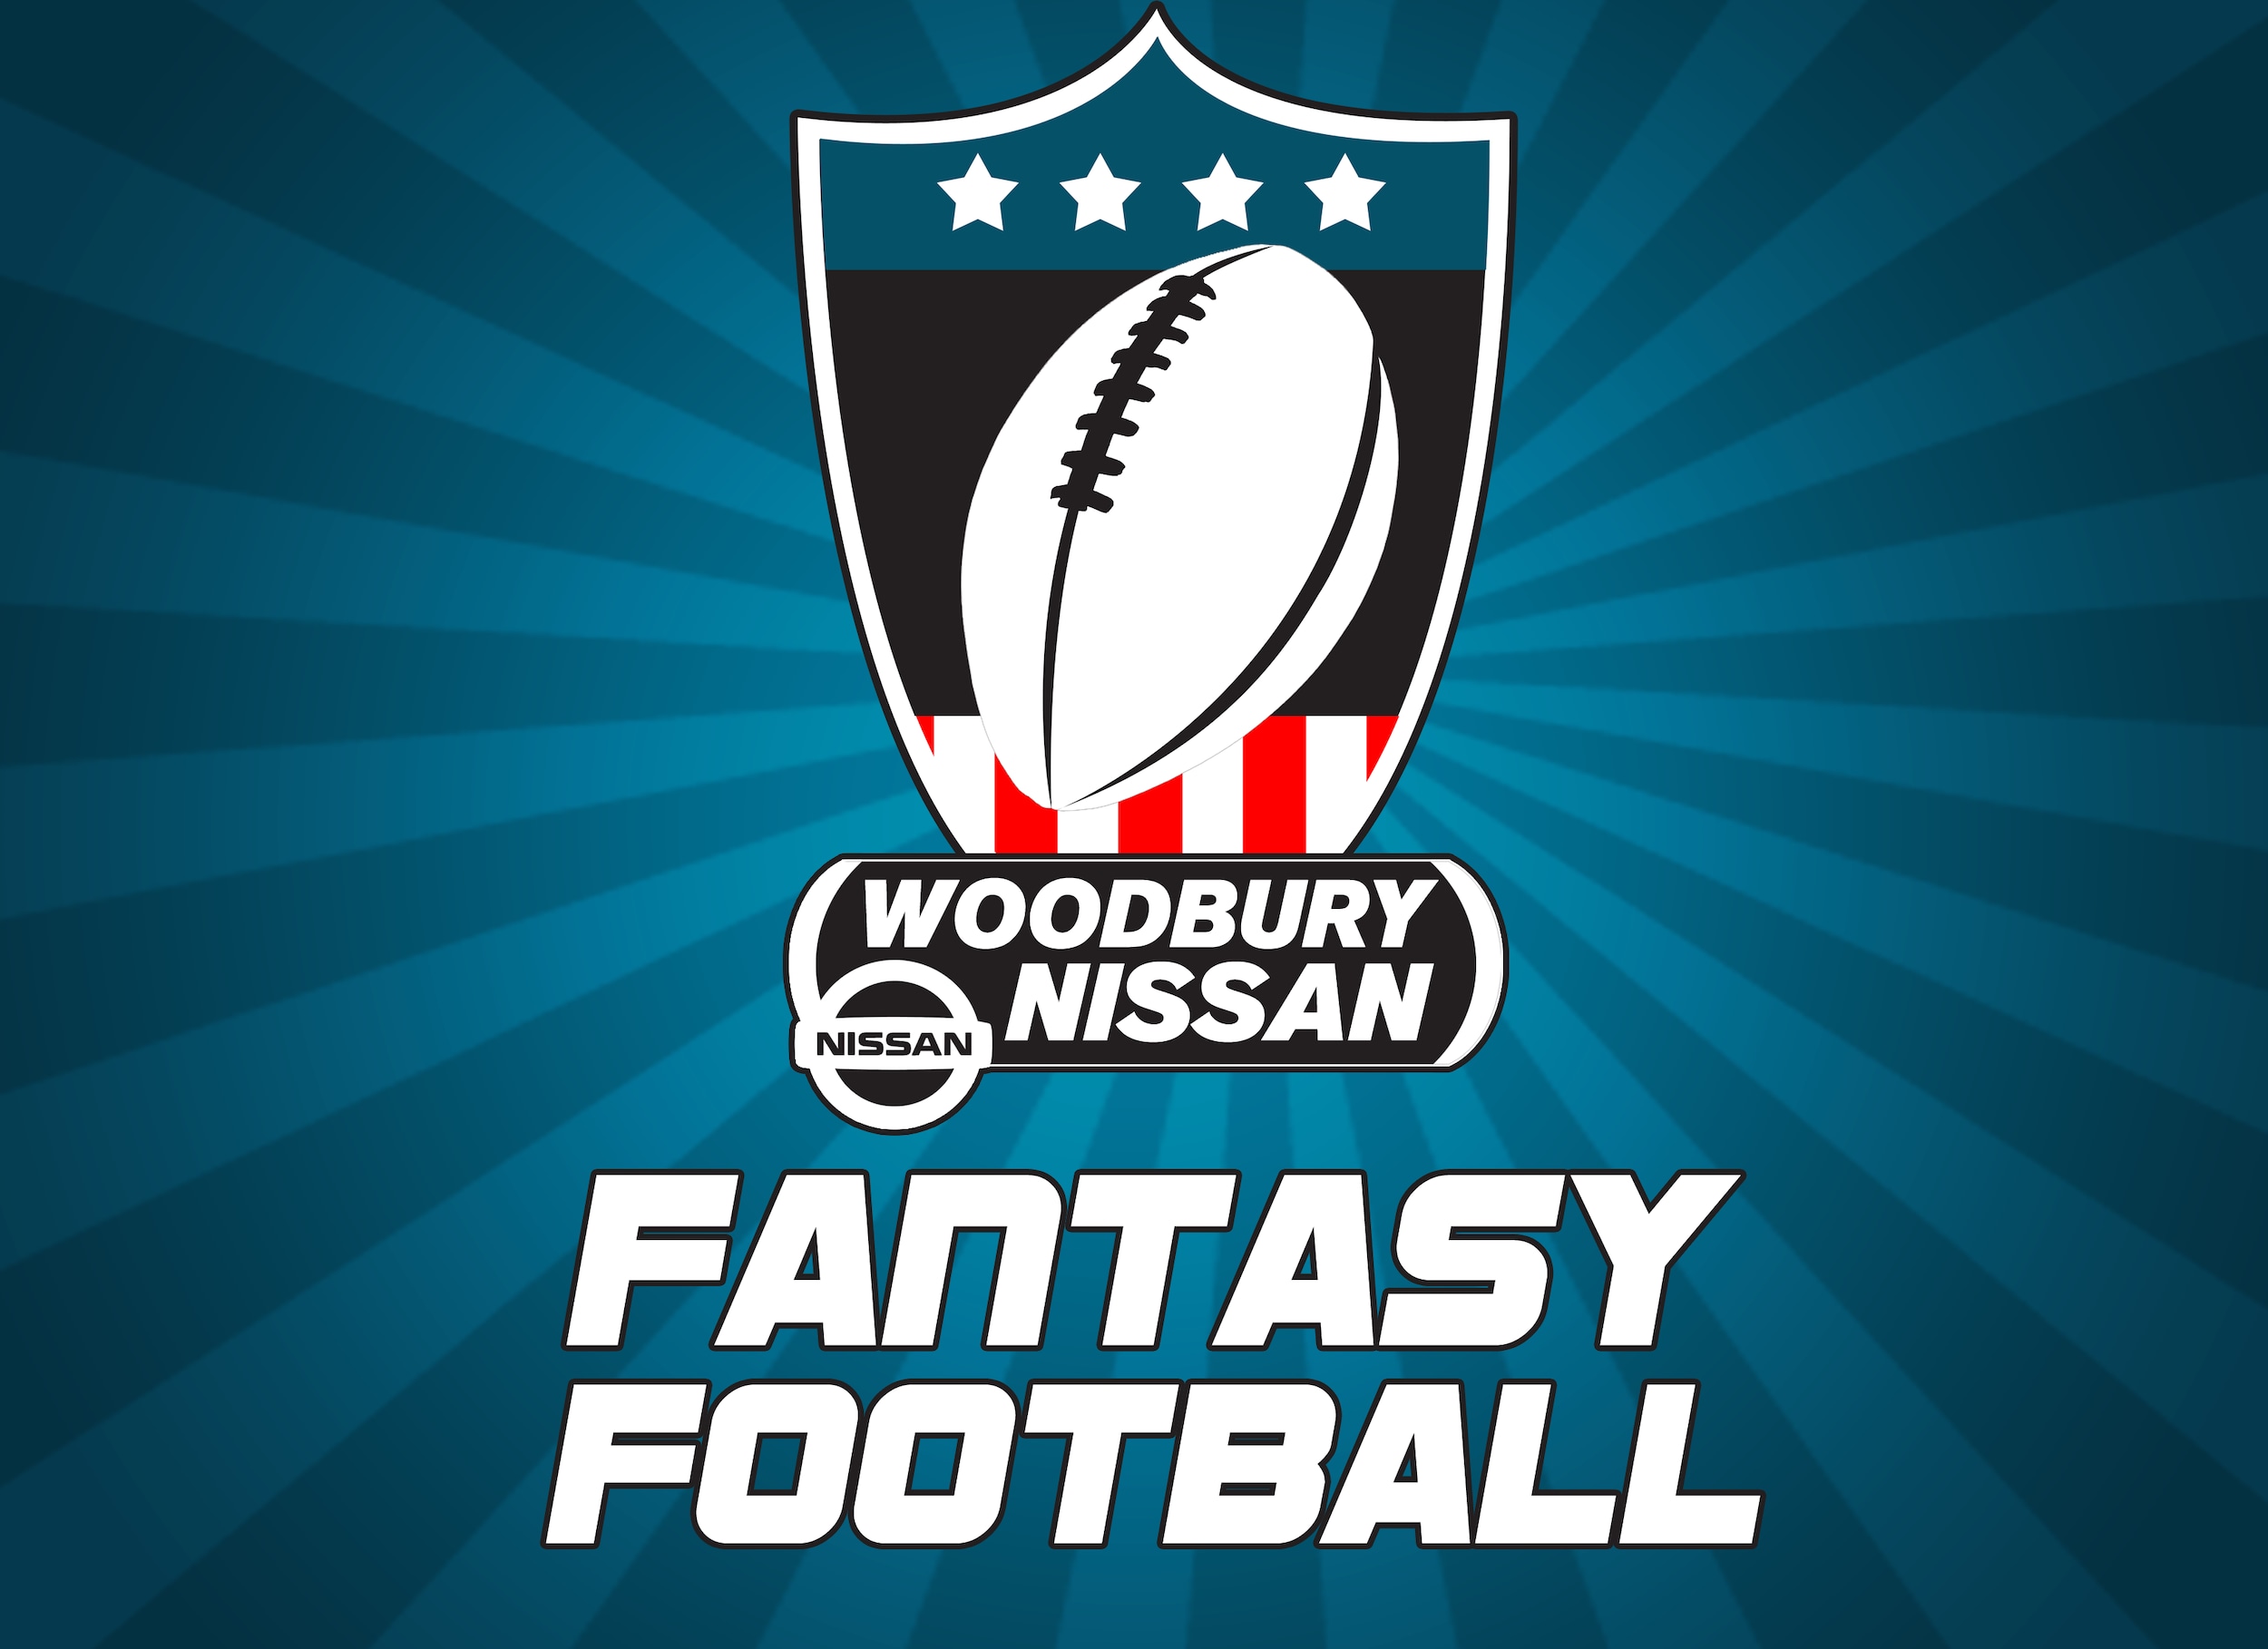 Woodbury nissan fantasy football #1